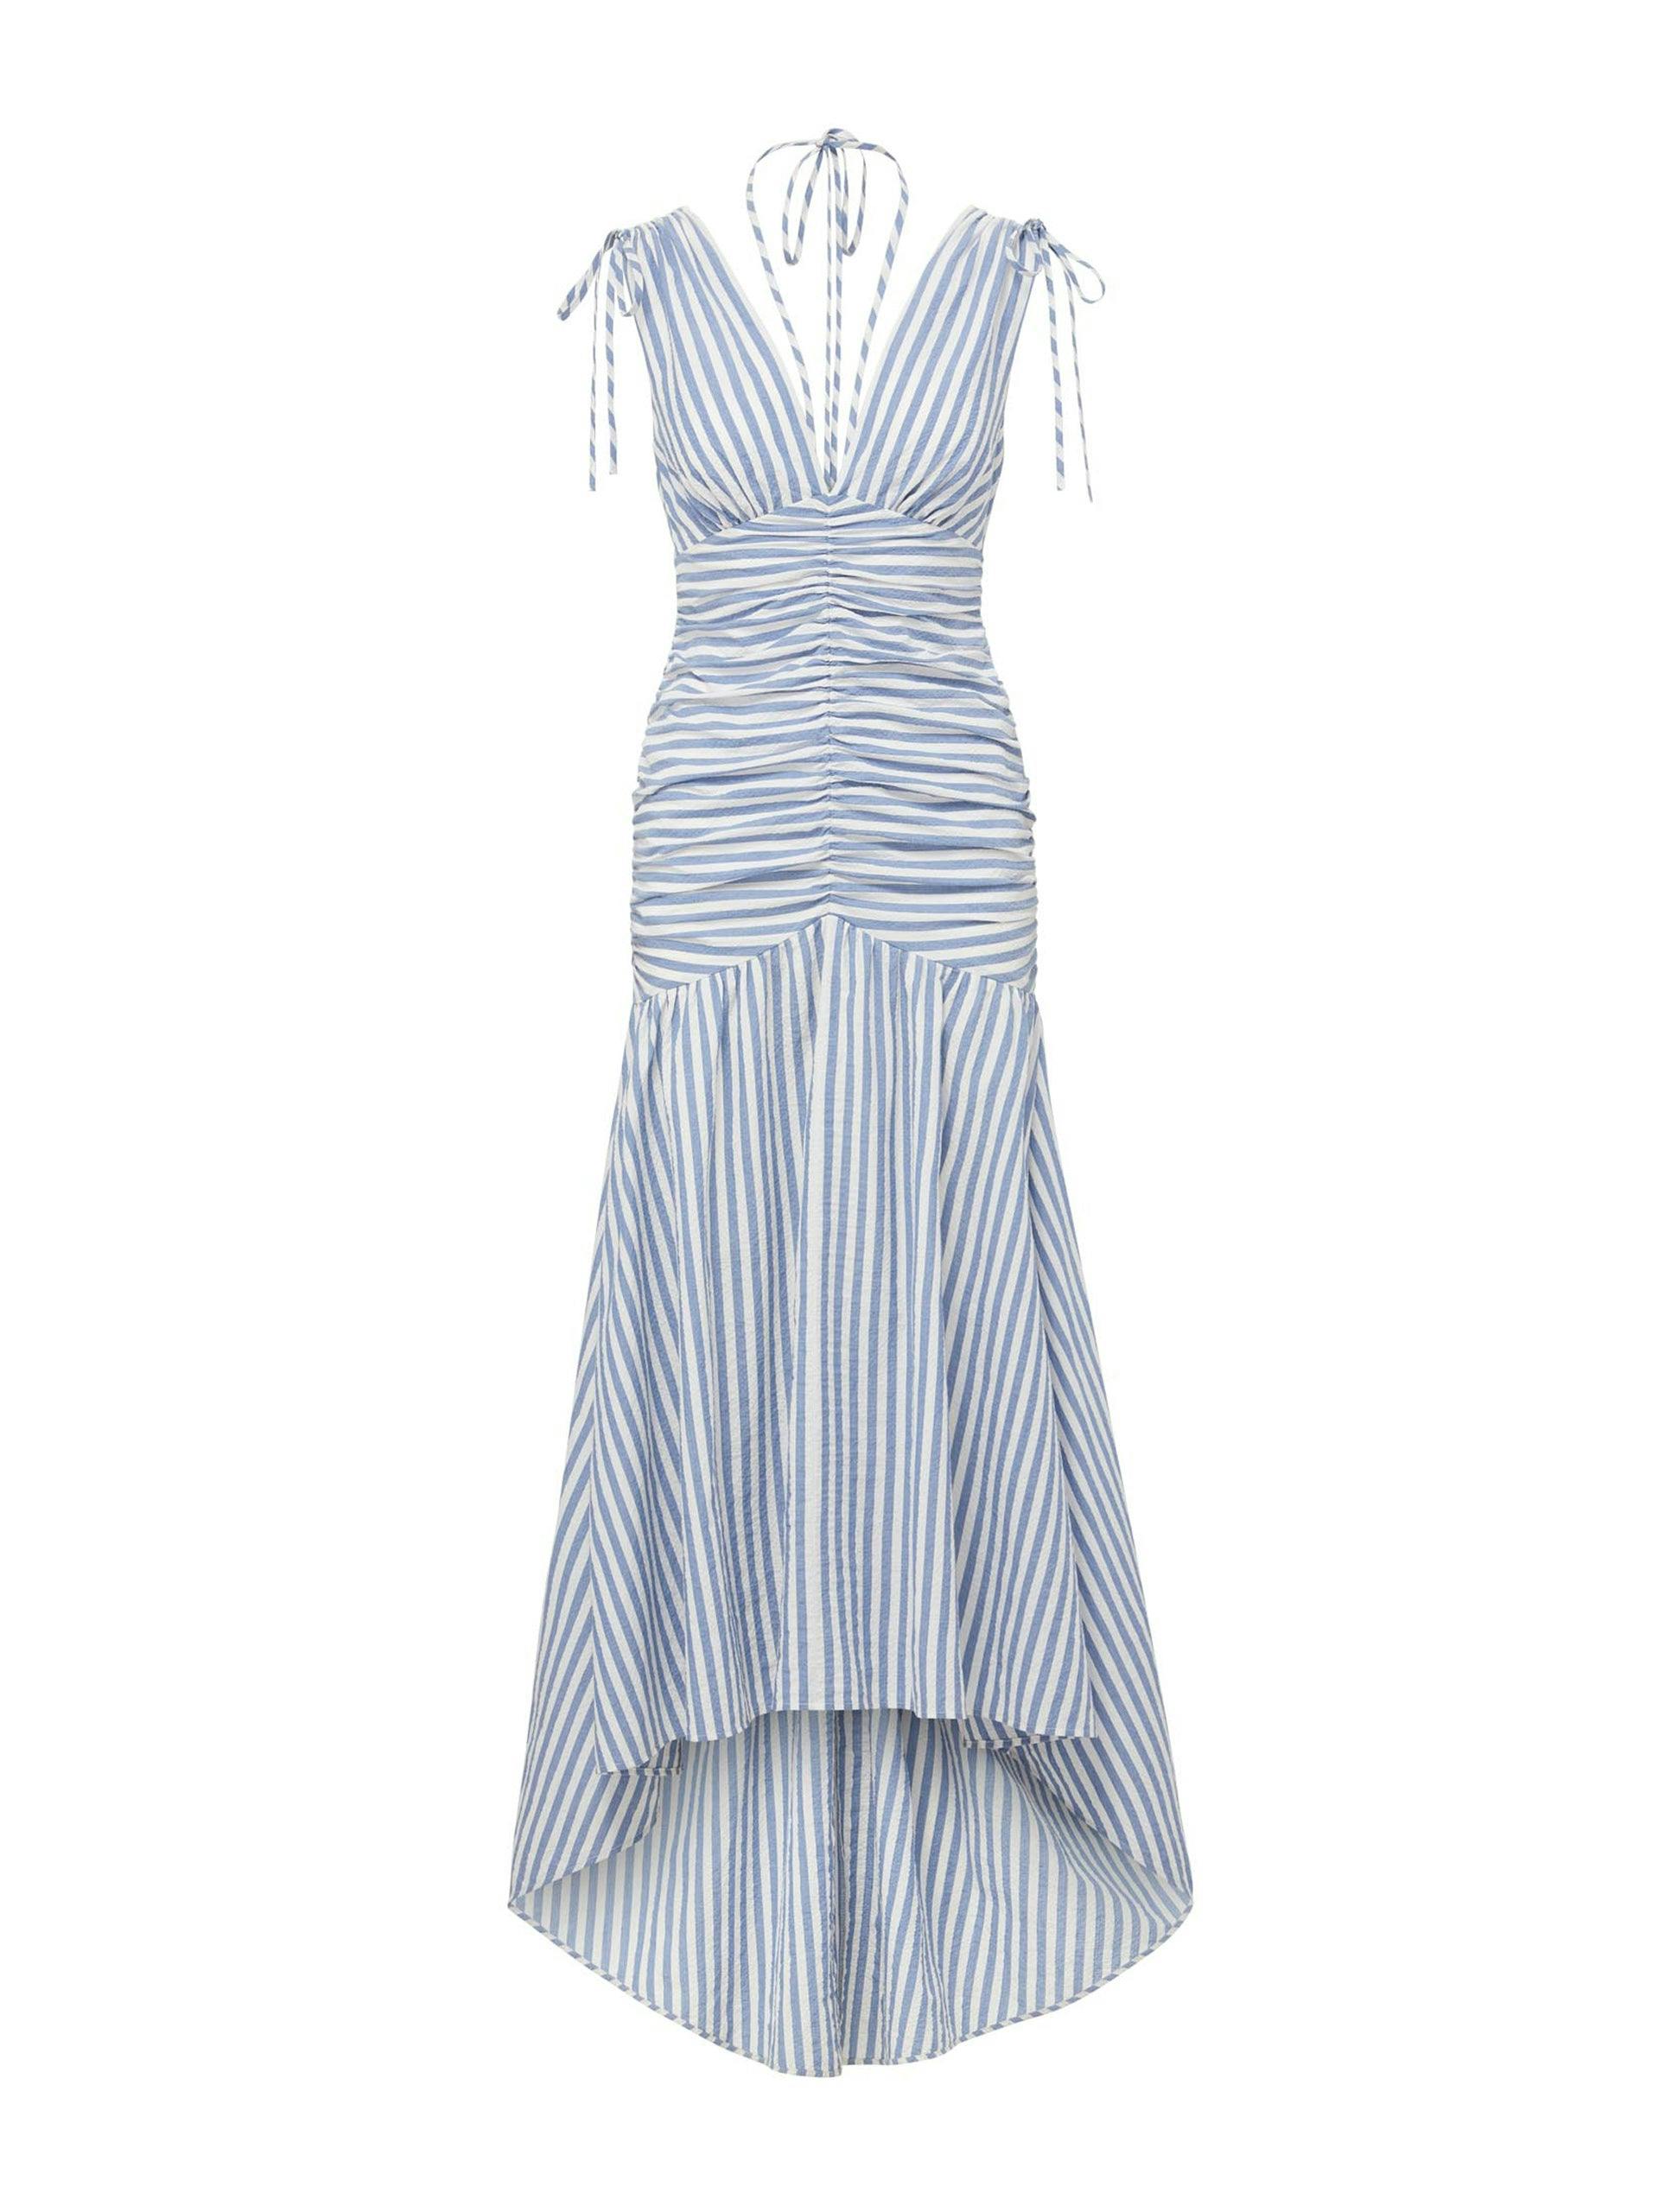 Blue and white striped v-neck dress